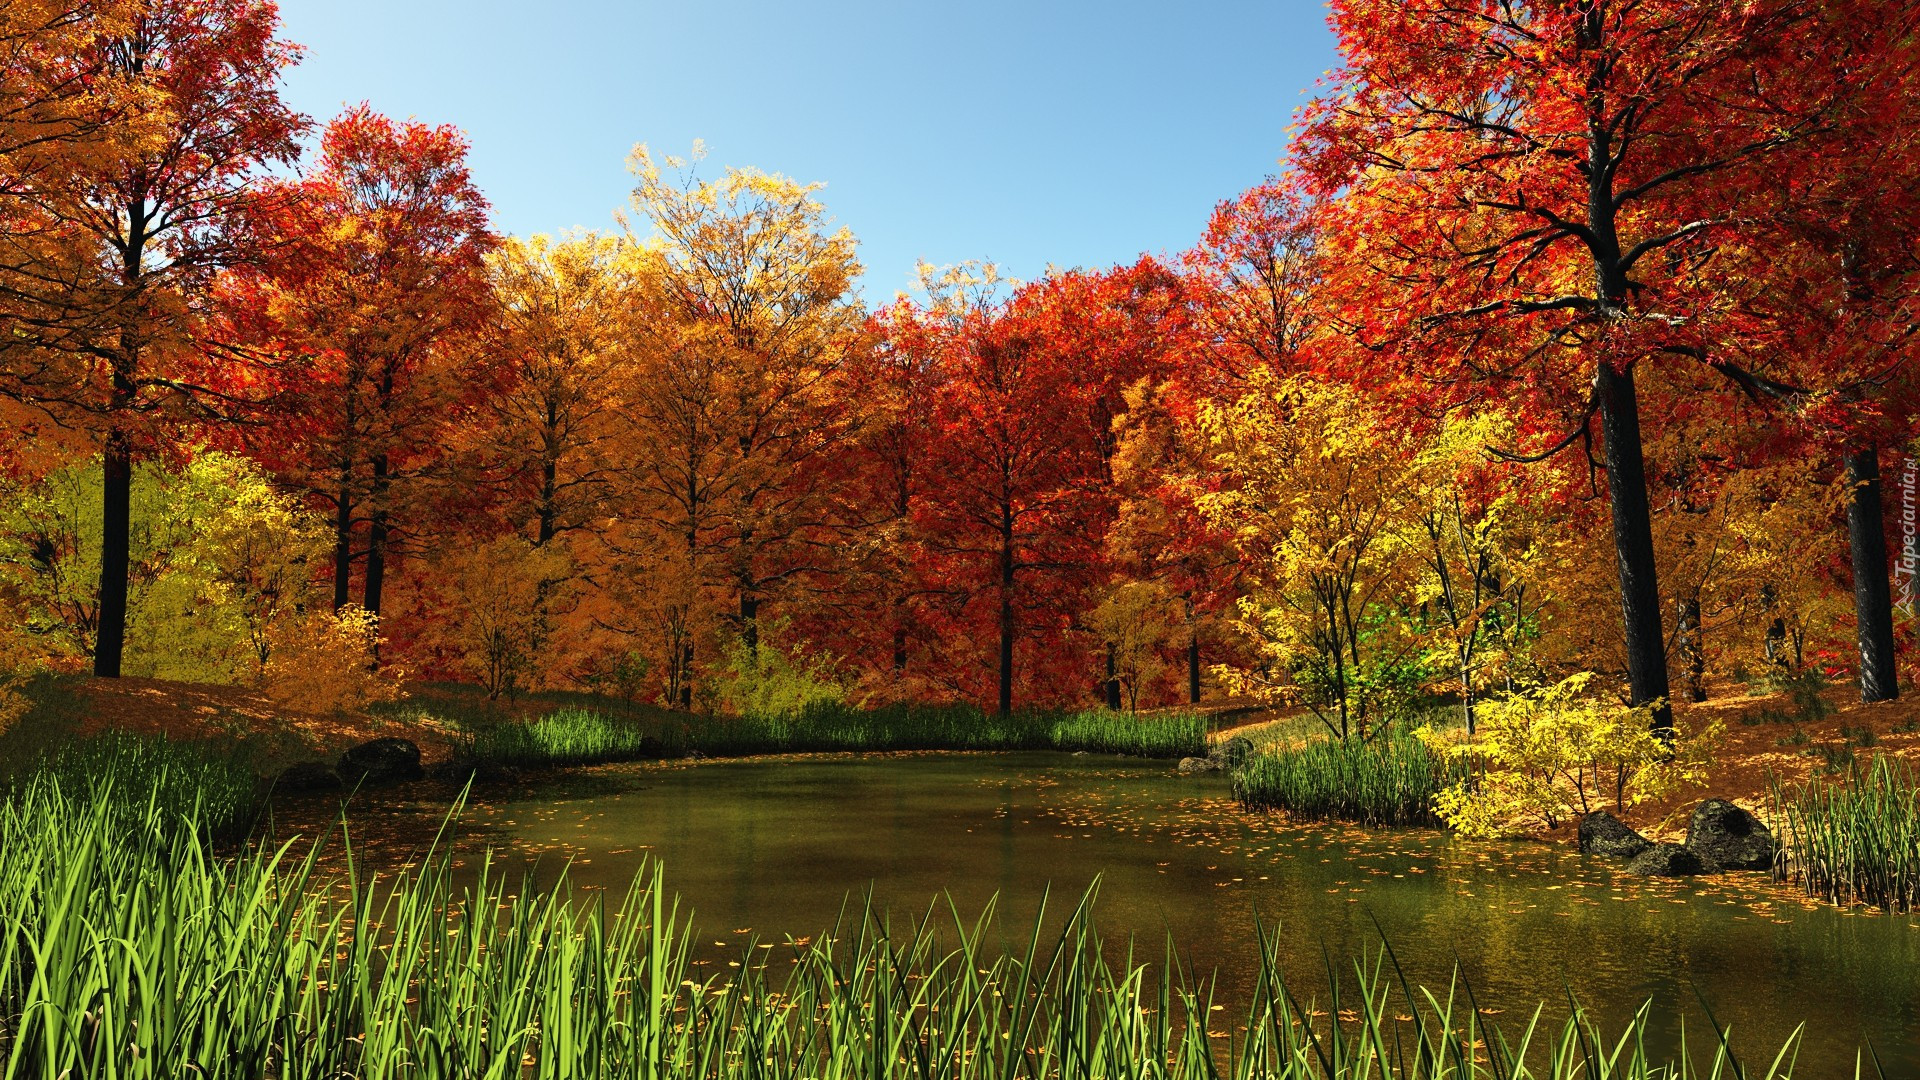 Desktop wallpaper showcasing the serene beauty of nature in the fall season.